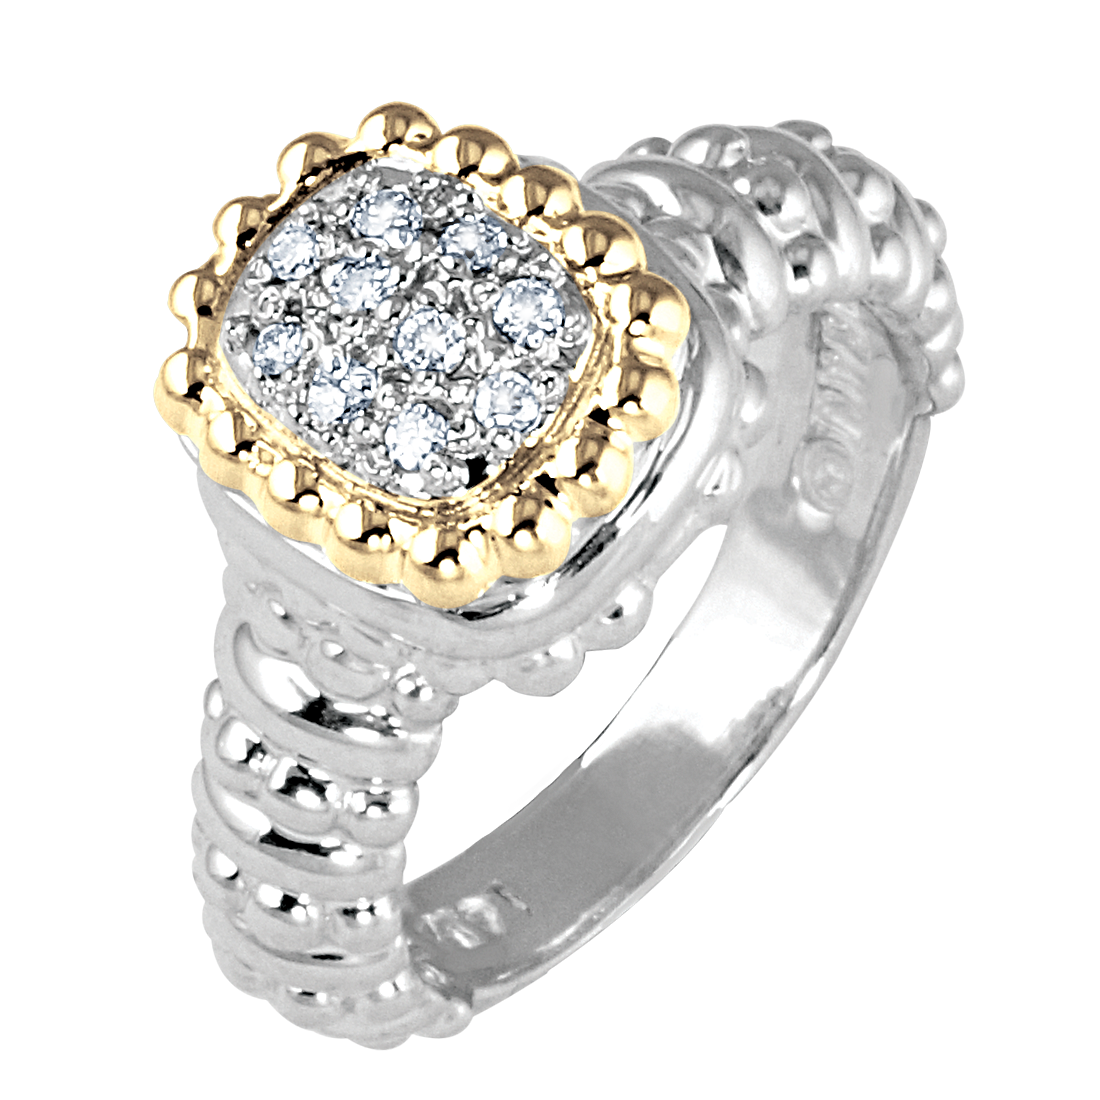 Vahan Sterling Silver & Yellow Gold Diamond Fashion Ring Acori Diamonds & Design Friendswood, TX